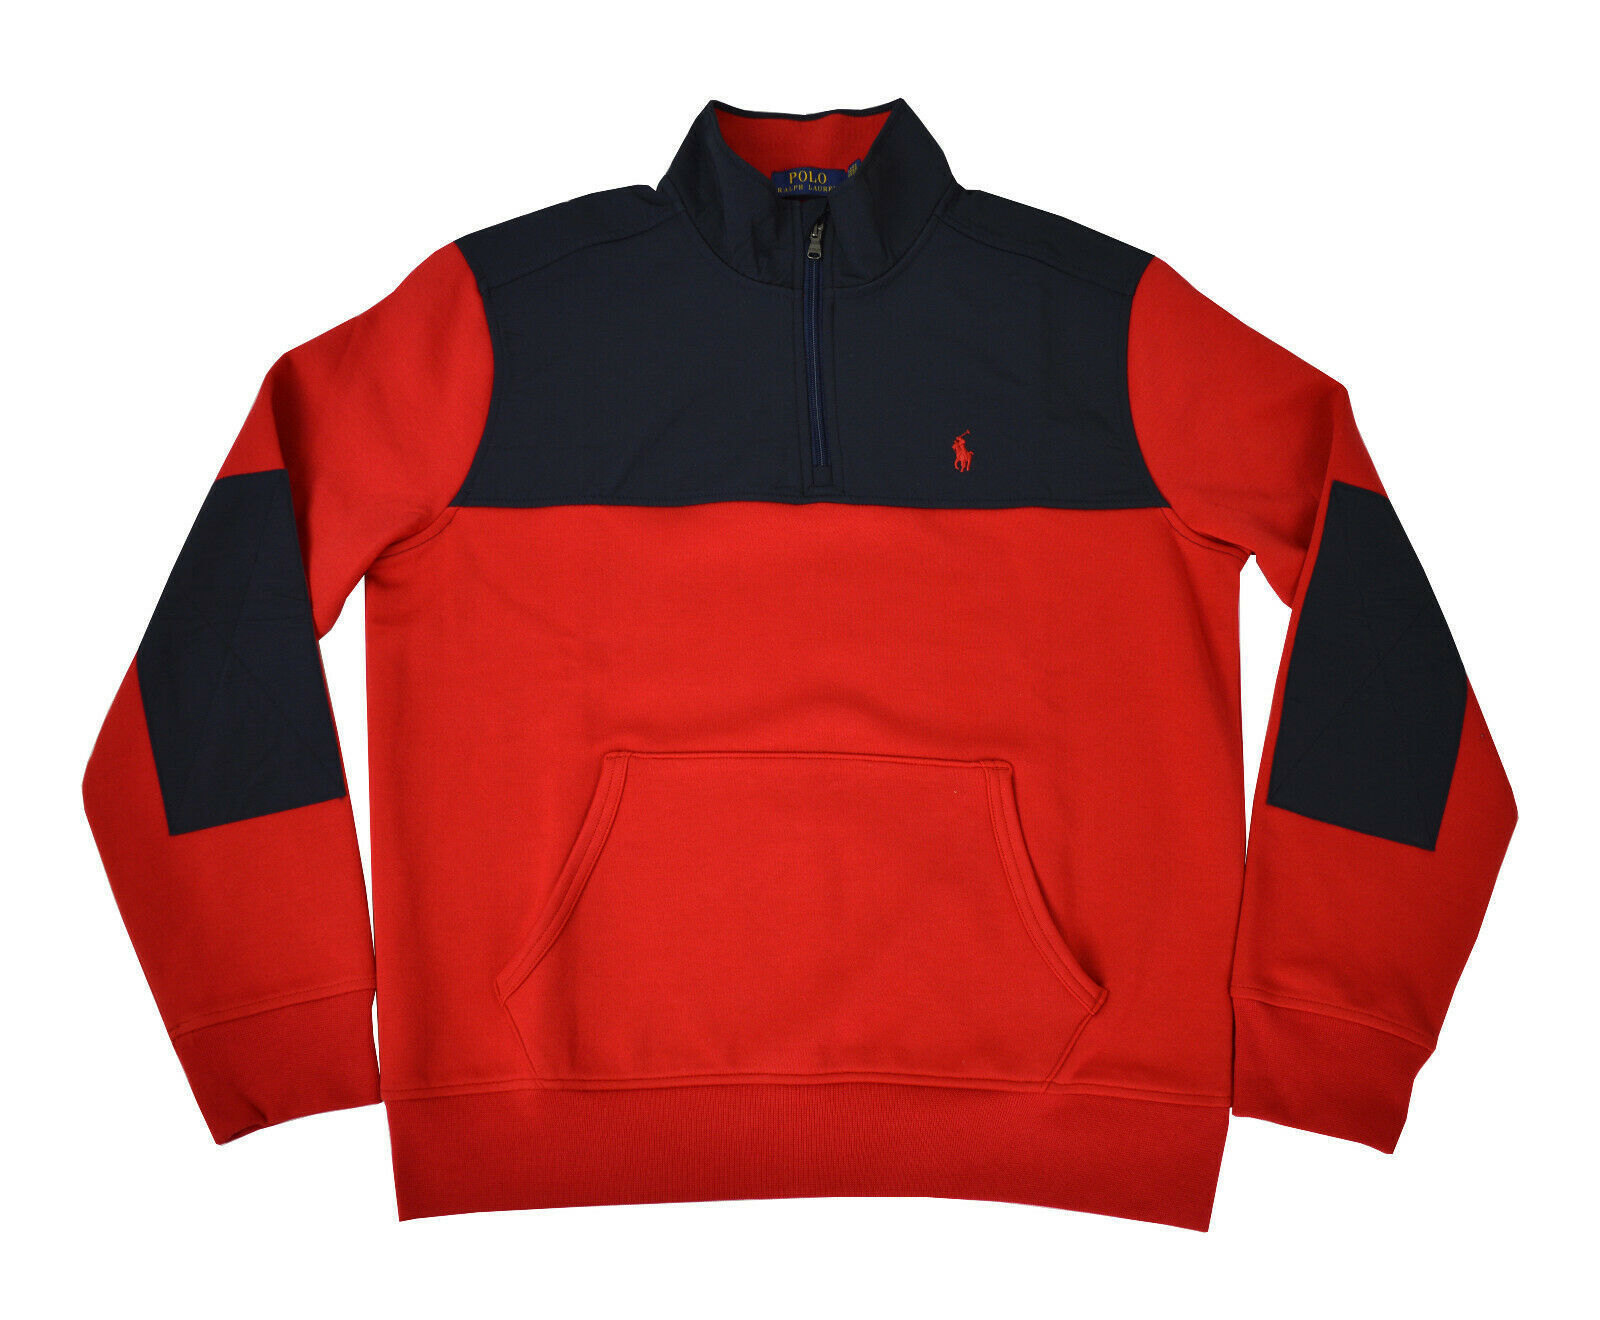 Polo Ralph Lauren Men's Jersey 1/4 Zip Golf Pullover, Red, Medium 7070-6 - $138.59